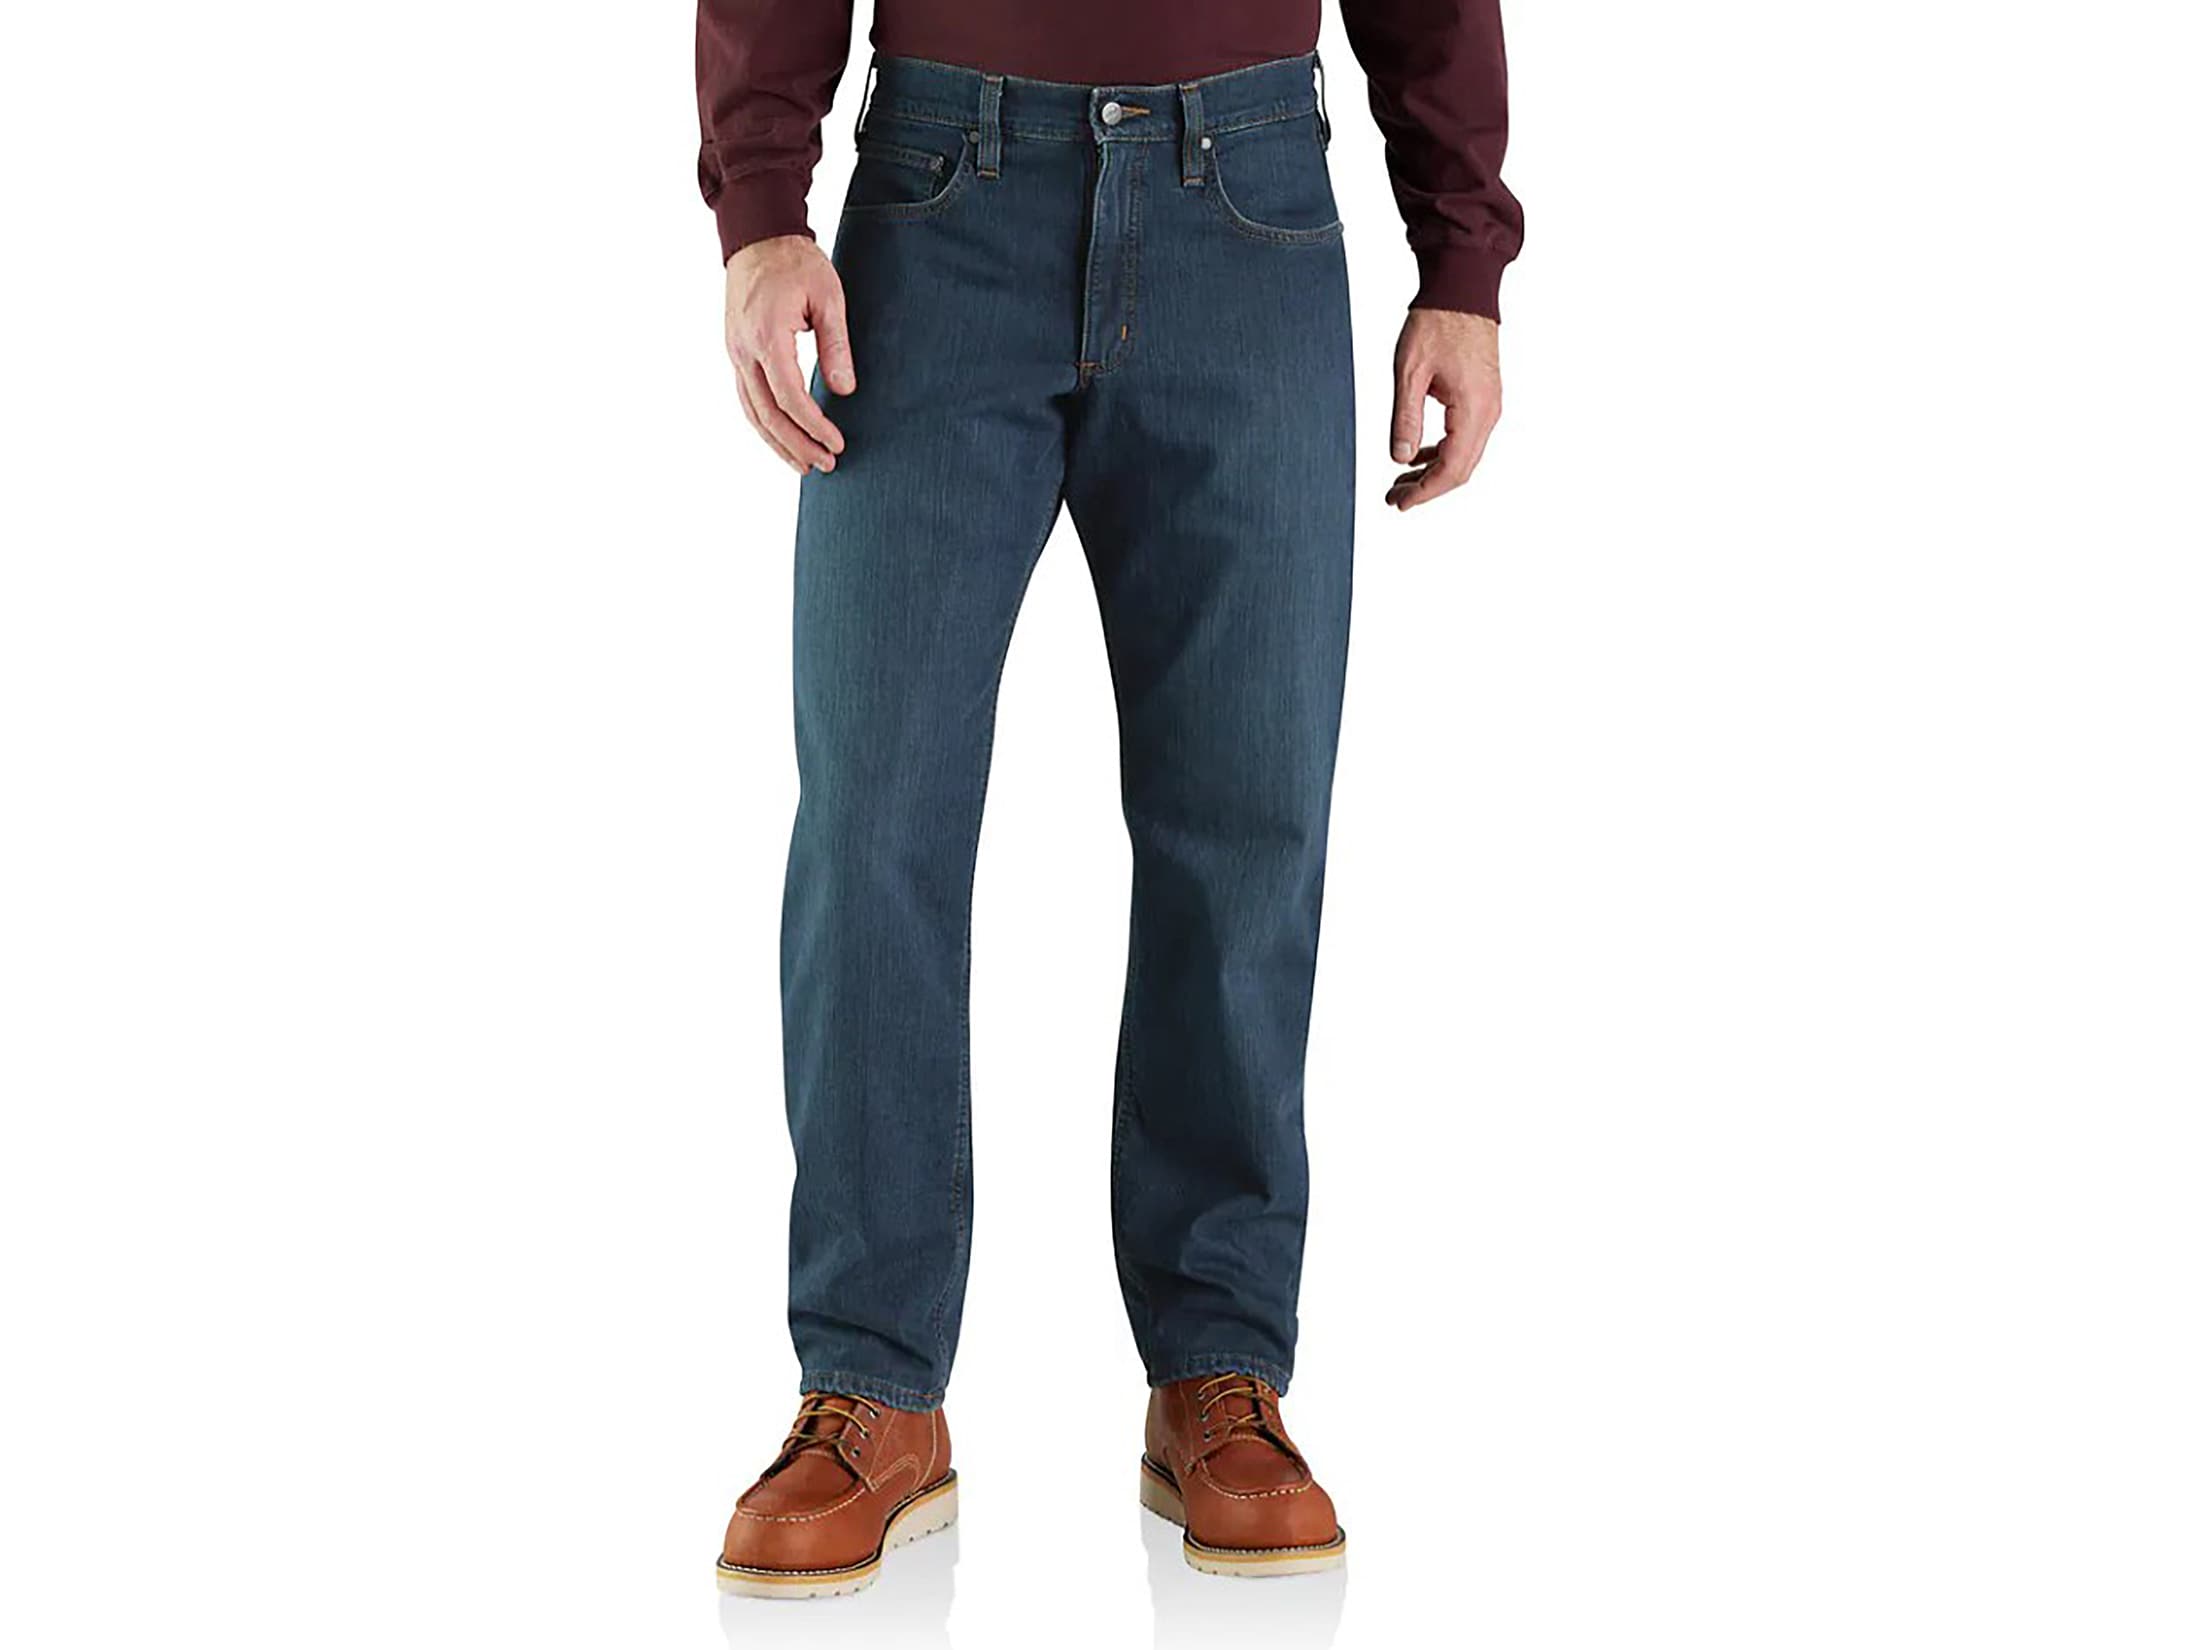 Carhartt Men's Rugged Flex Relaxed Fit Fleece Lined 5 Pocket Jeans